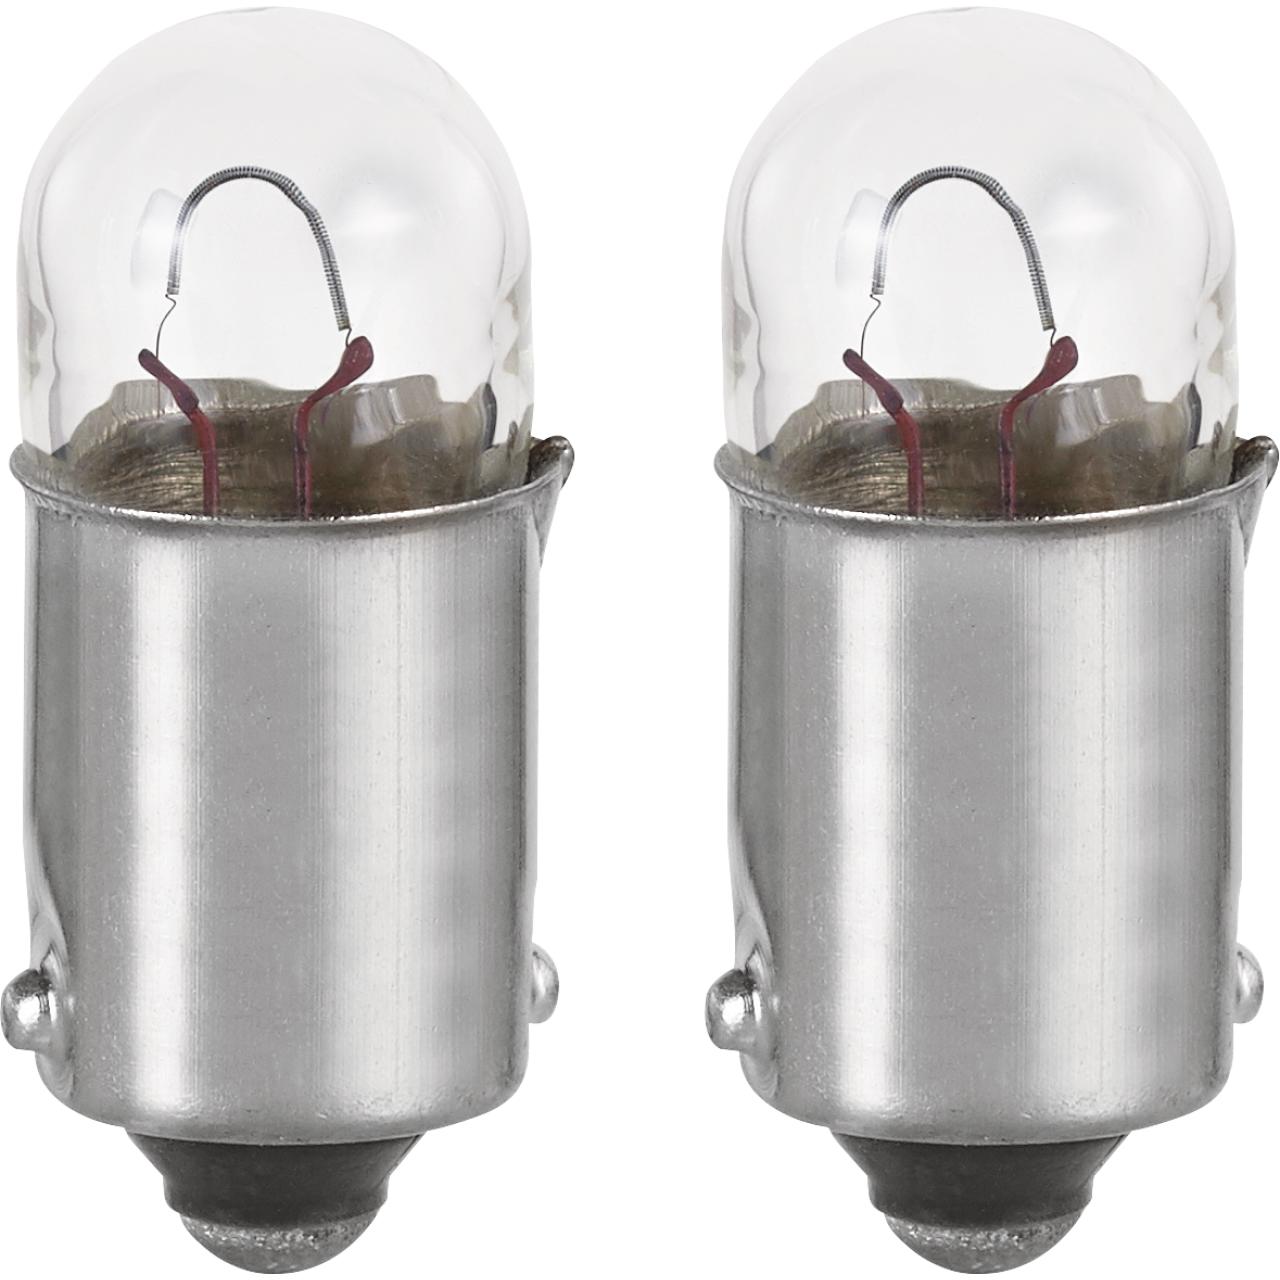 Formula 1® Signallampe SL109, T4W, 12 V, 4 W, 2 Stück